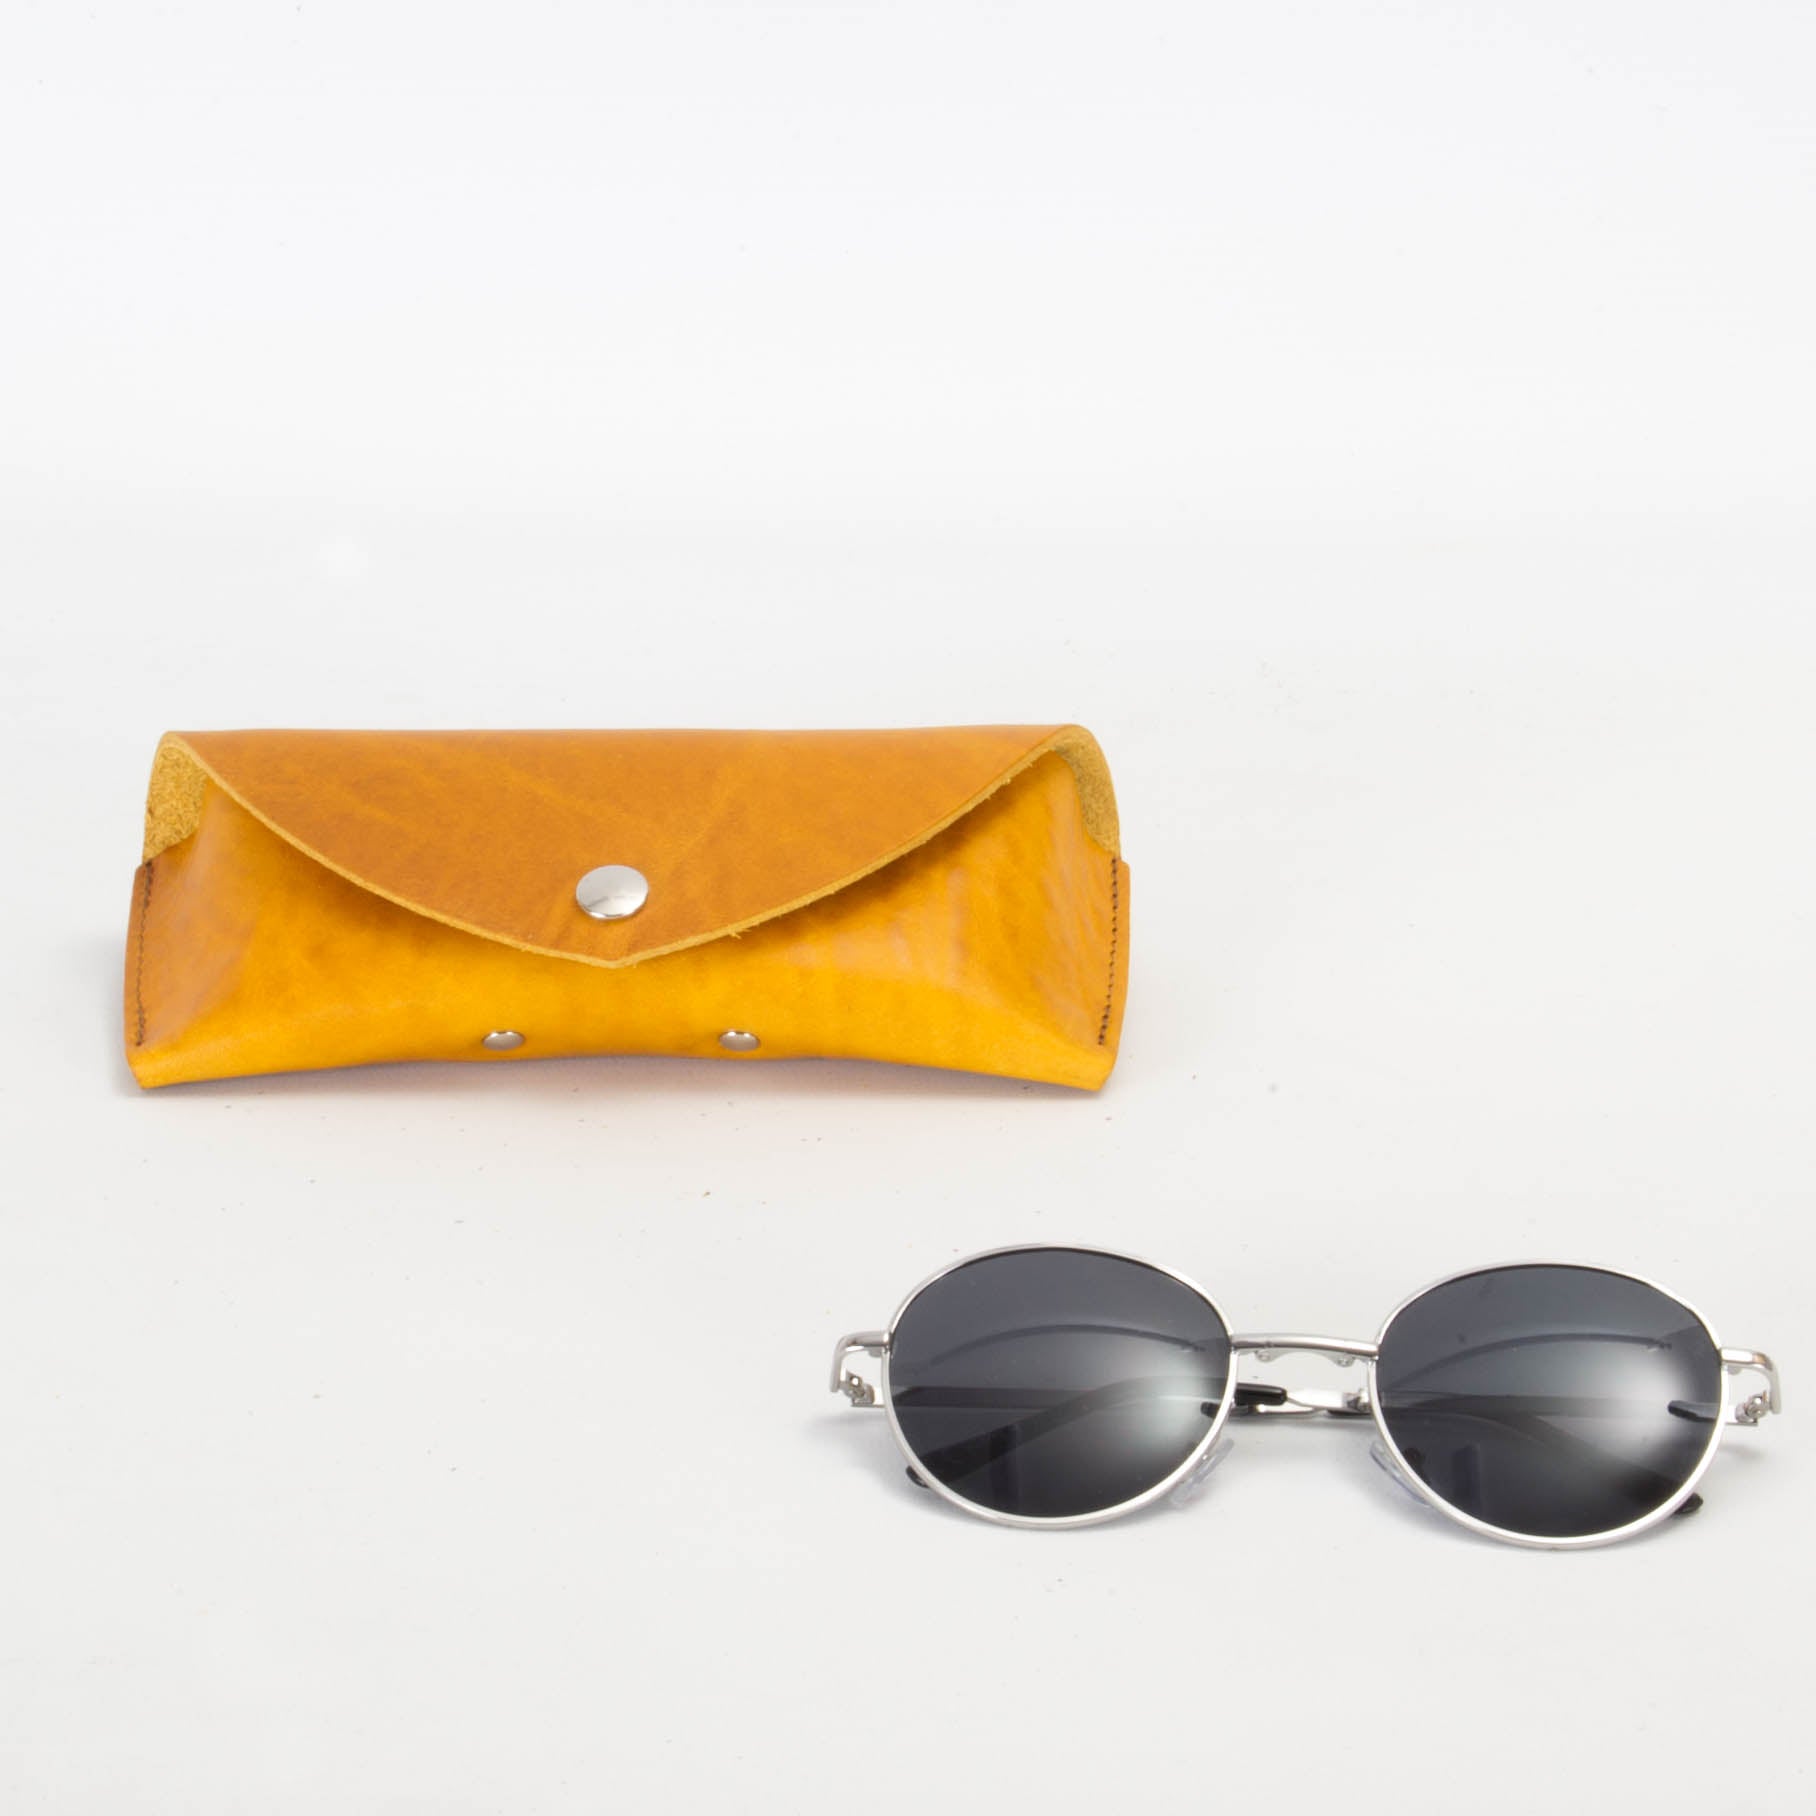 Missouri Mustard Yellow Leather Sunglasses Case